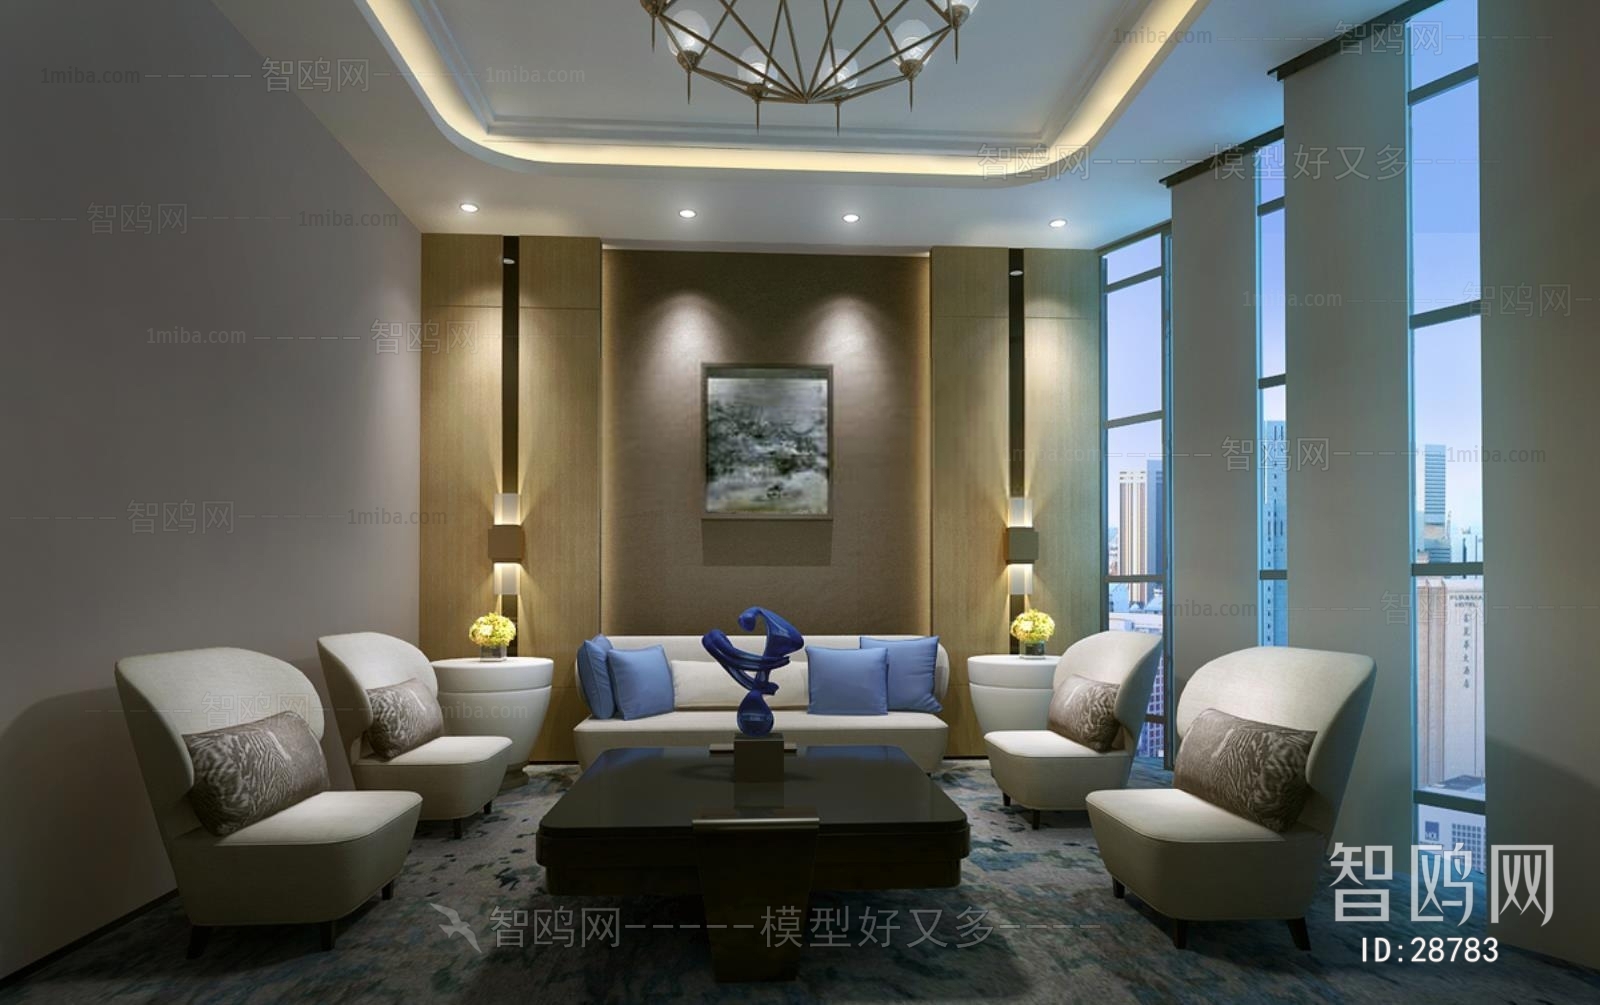 Modern Hong Kong Style Meeting Room